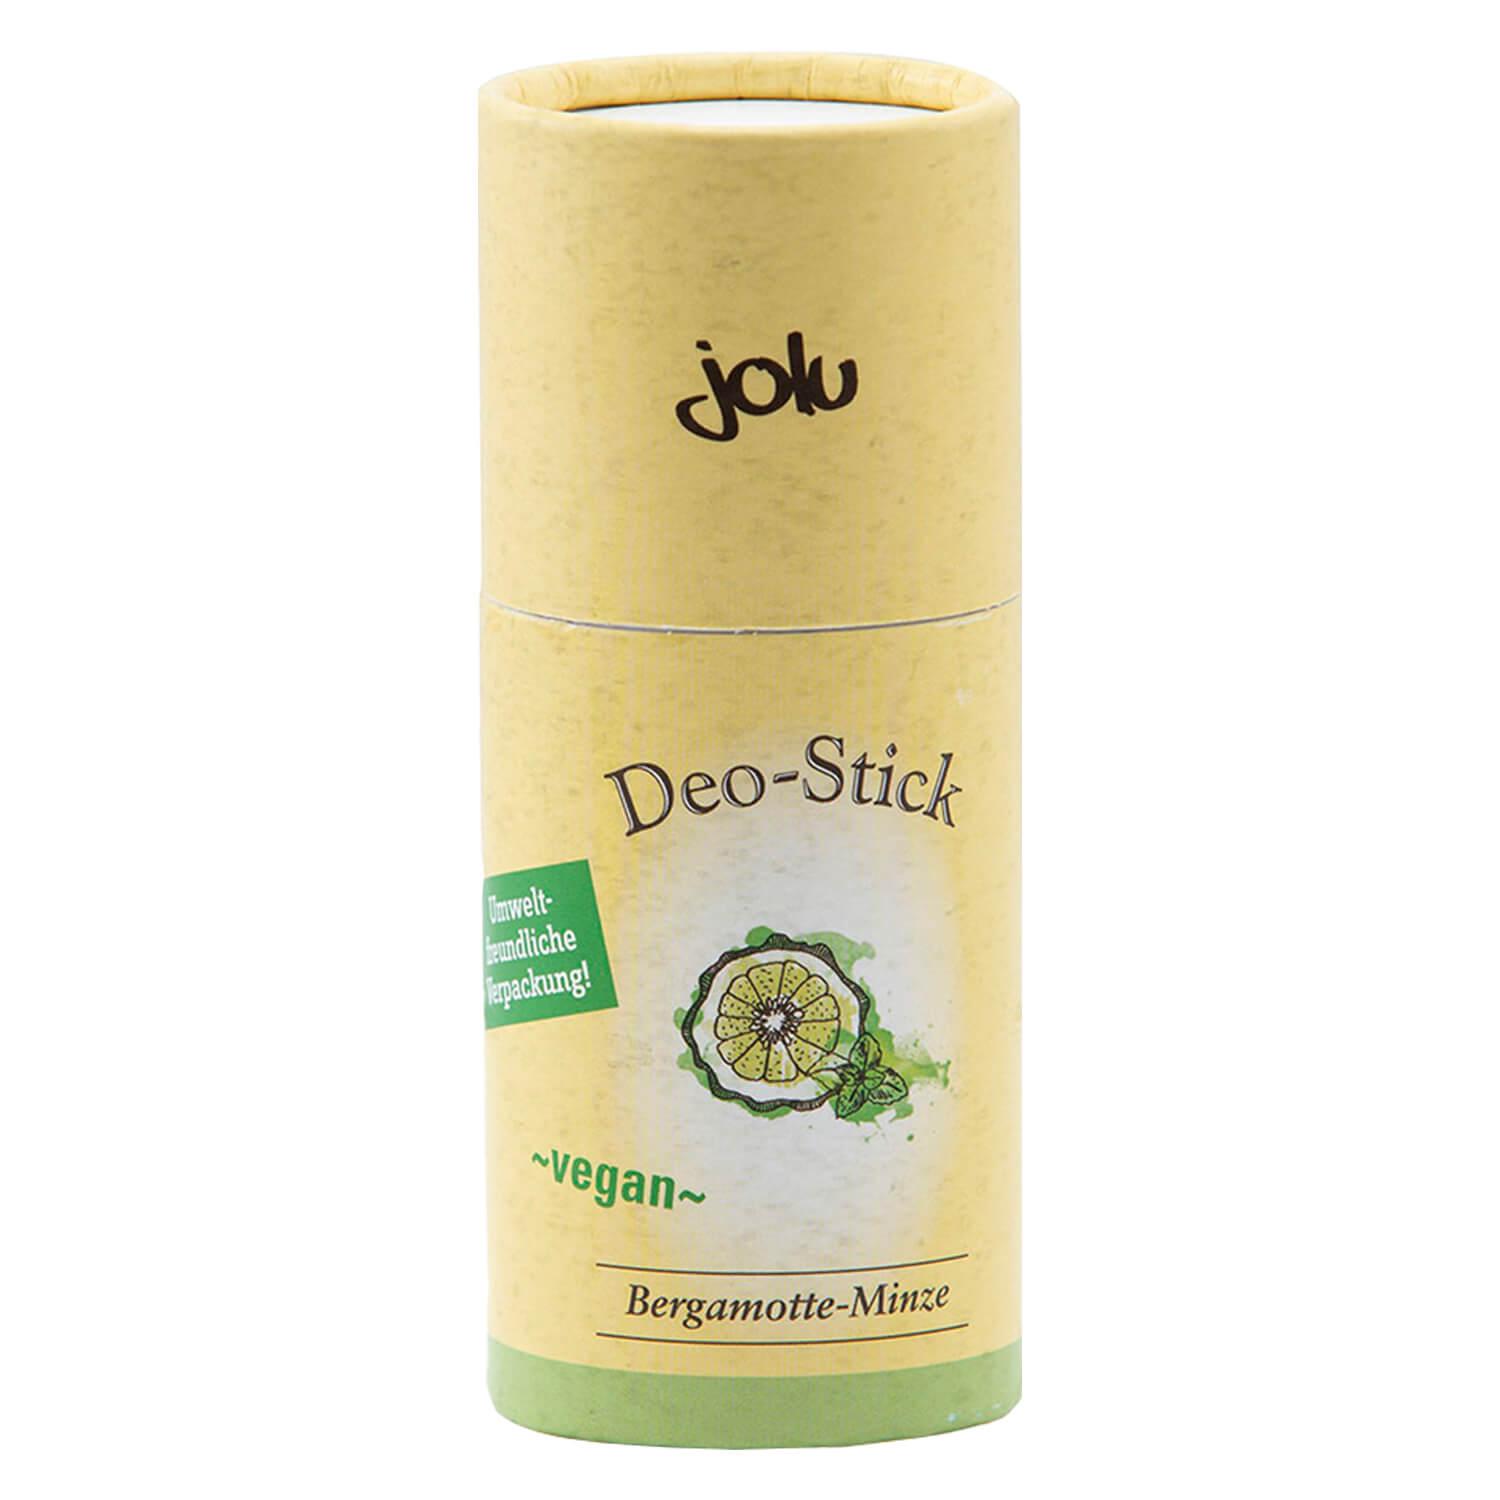 jolu - Vegan Deodorant Bergamot Mint